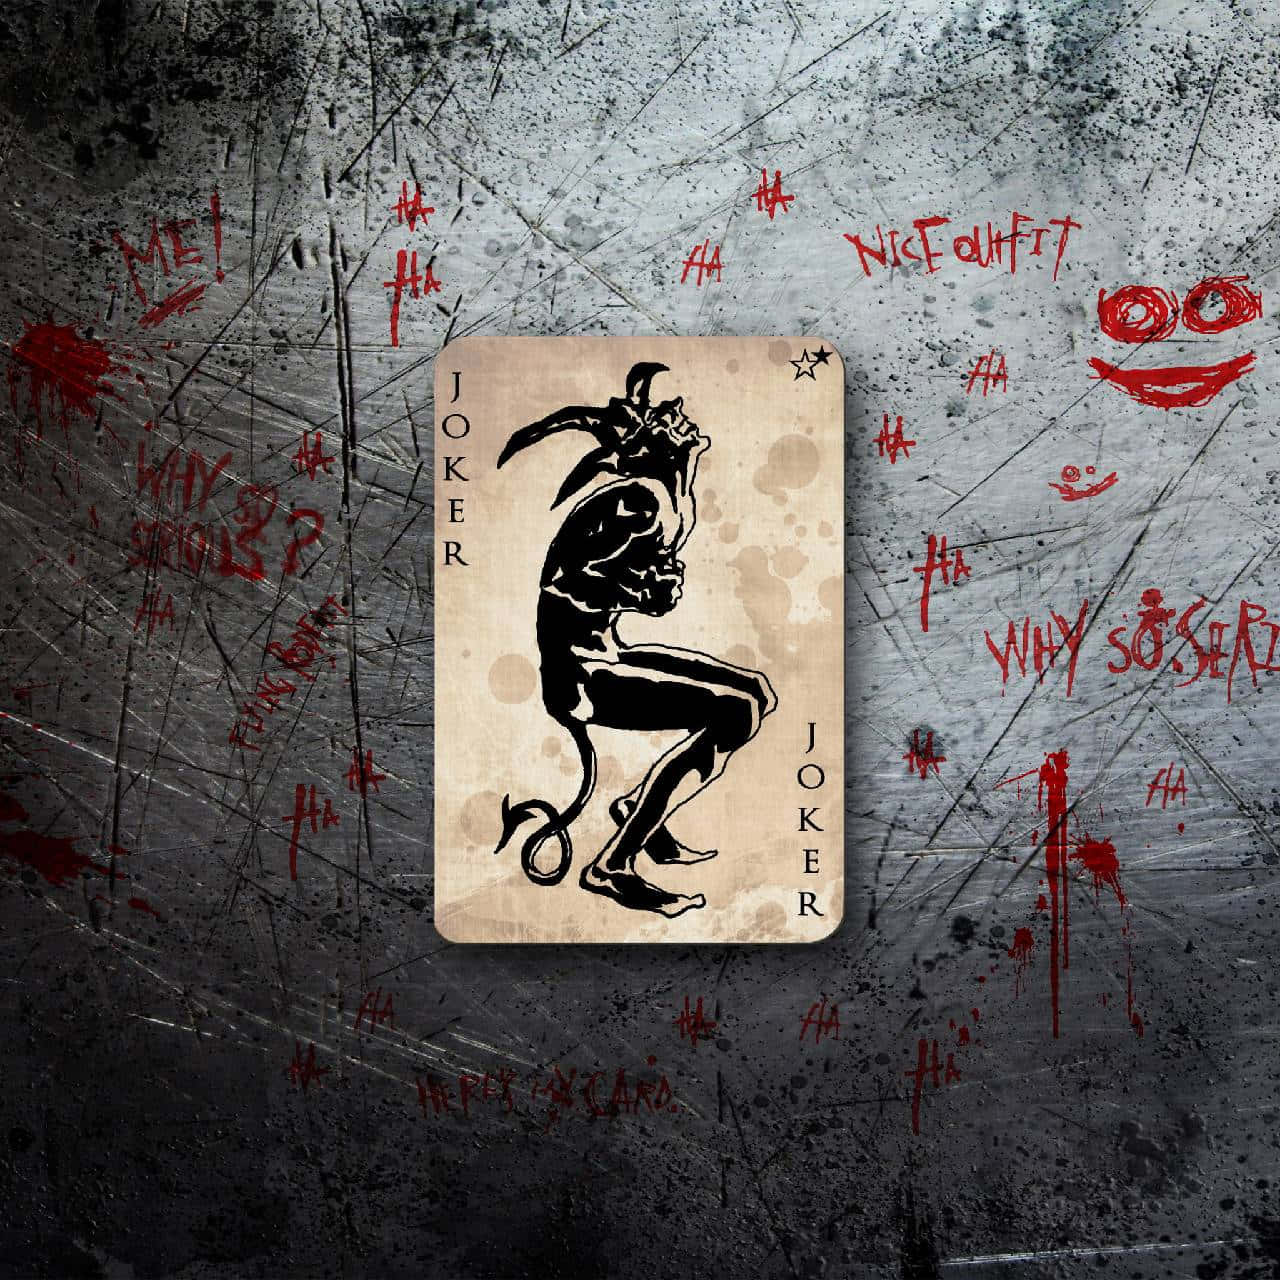 Caption: Mysterious Joker Card with Cool Artwork Wallpaper